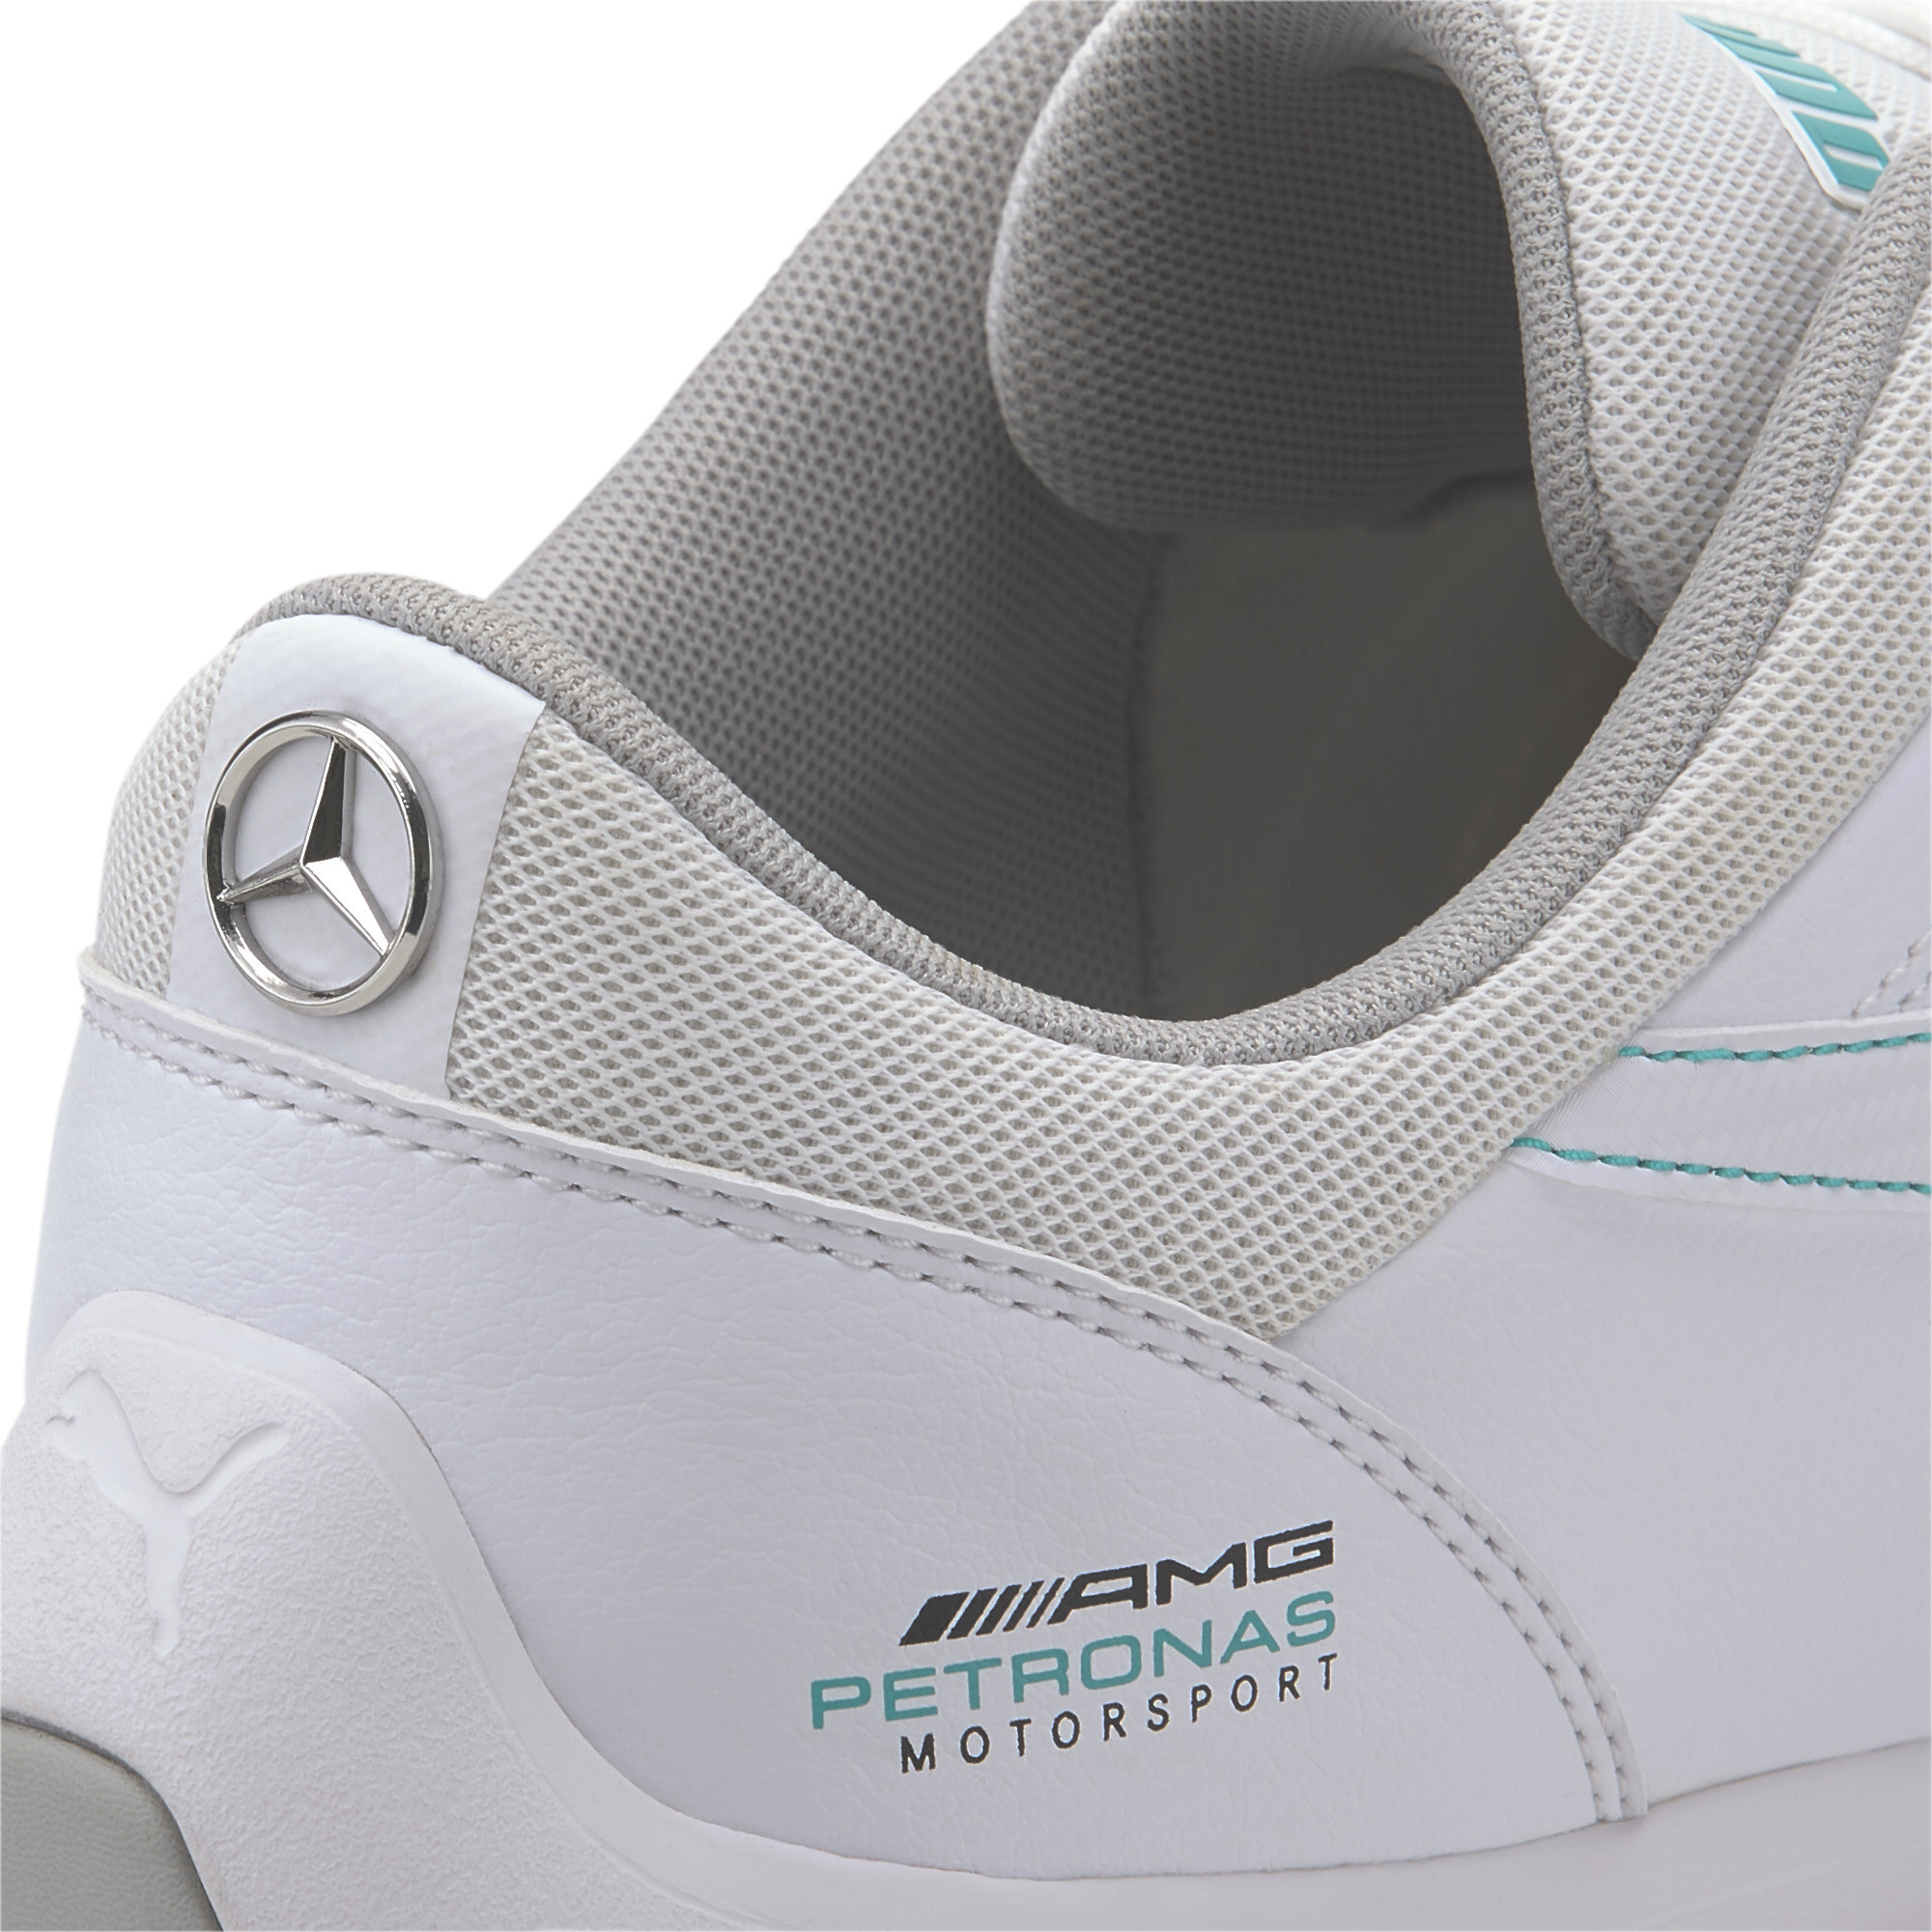 PUMA Men's Mercedes-AMG Petronas Kart Cat III Motorsport Shoes | eBay